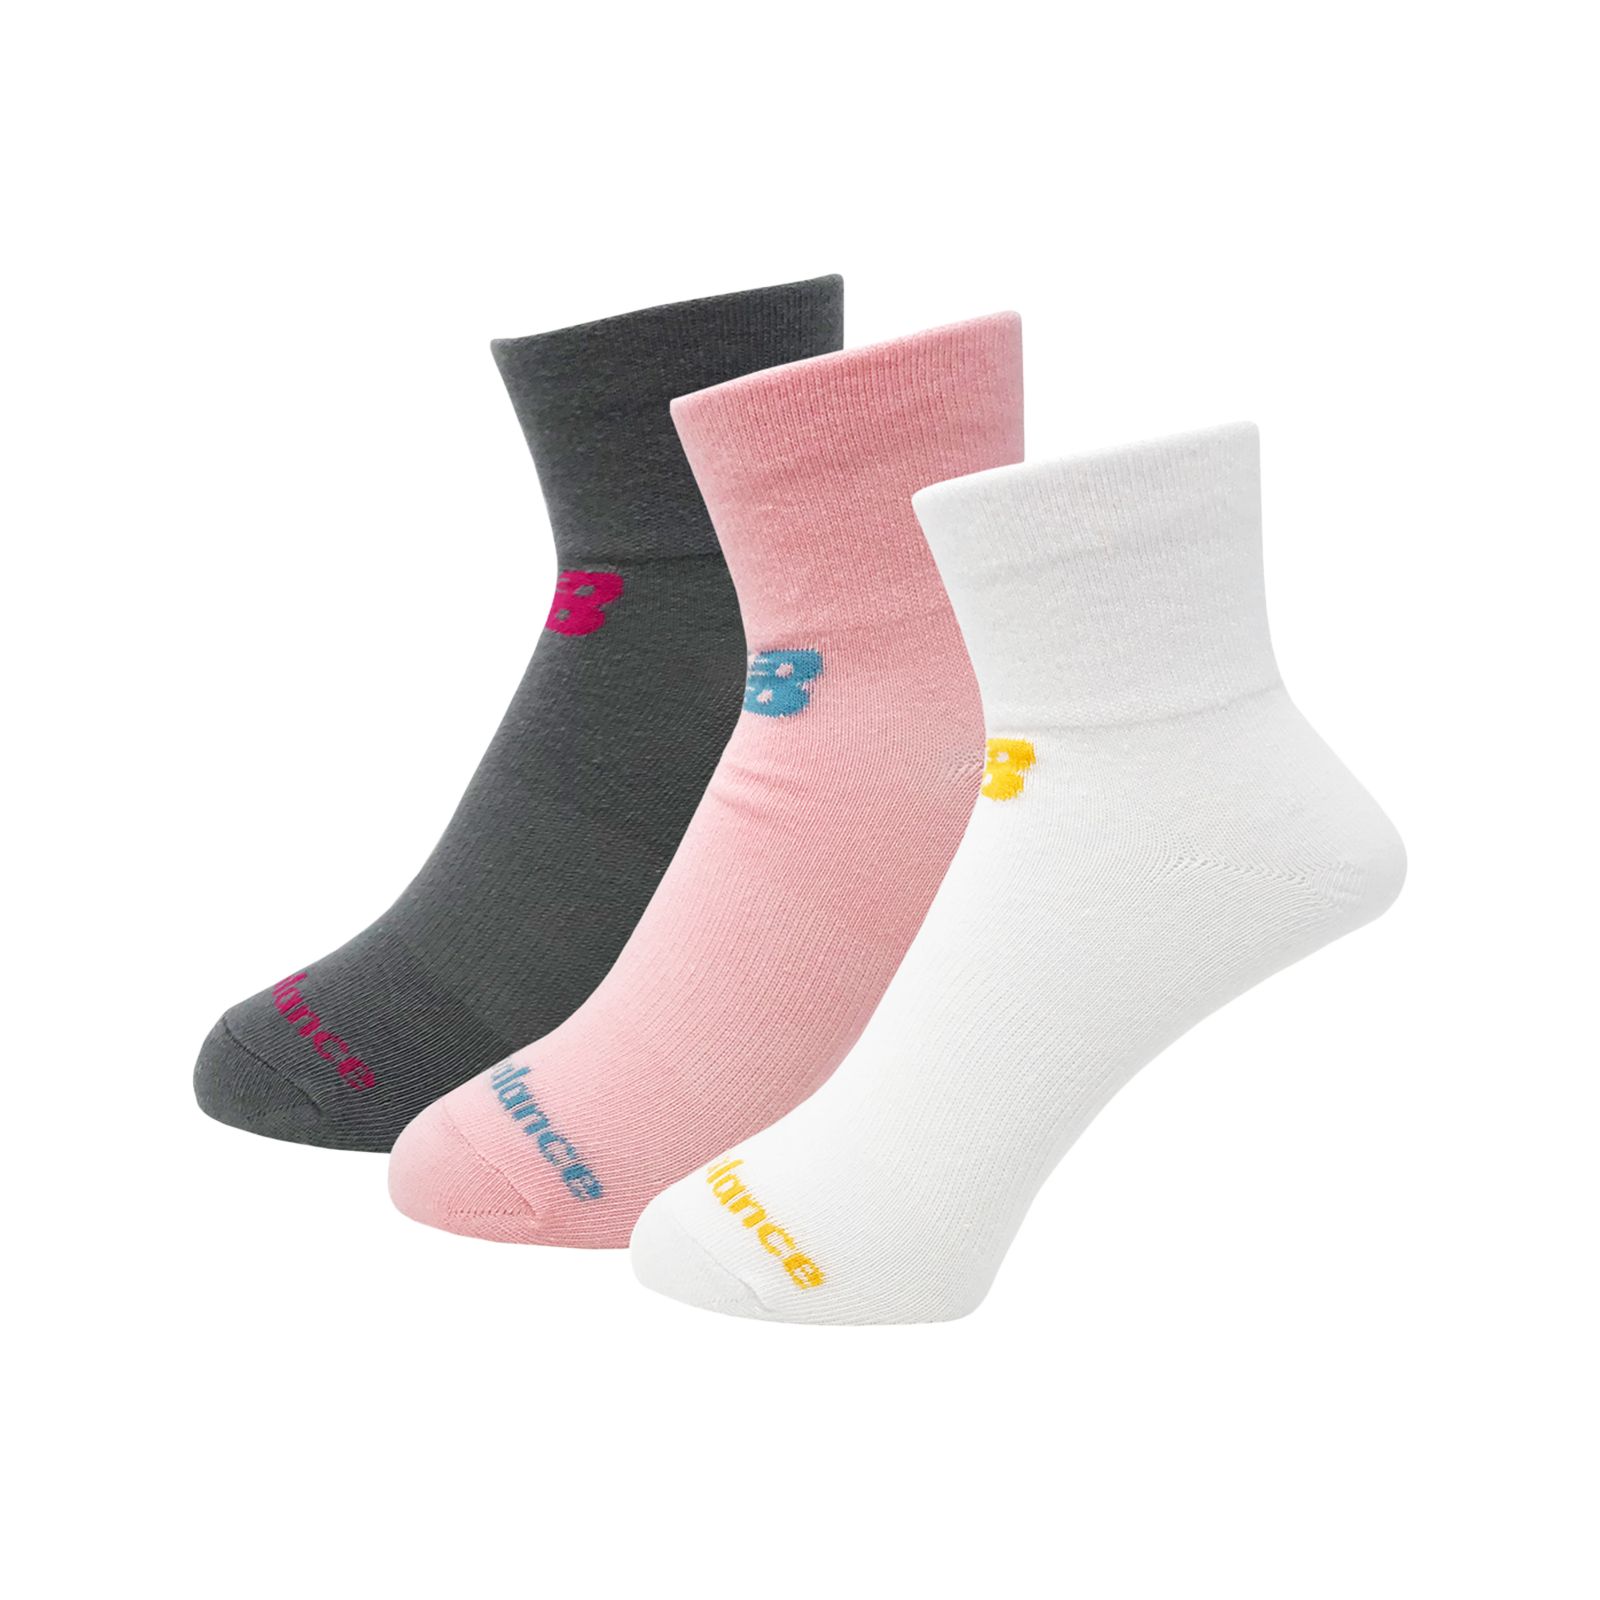 Performance Cotton Flat Knit Ankle Socks 3 Pack - New Balance